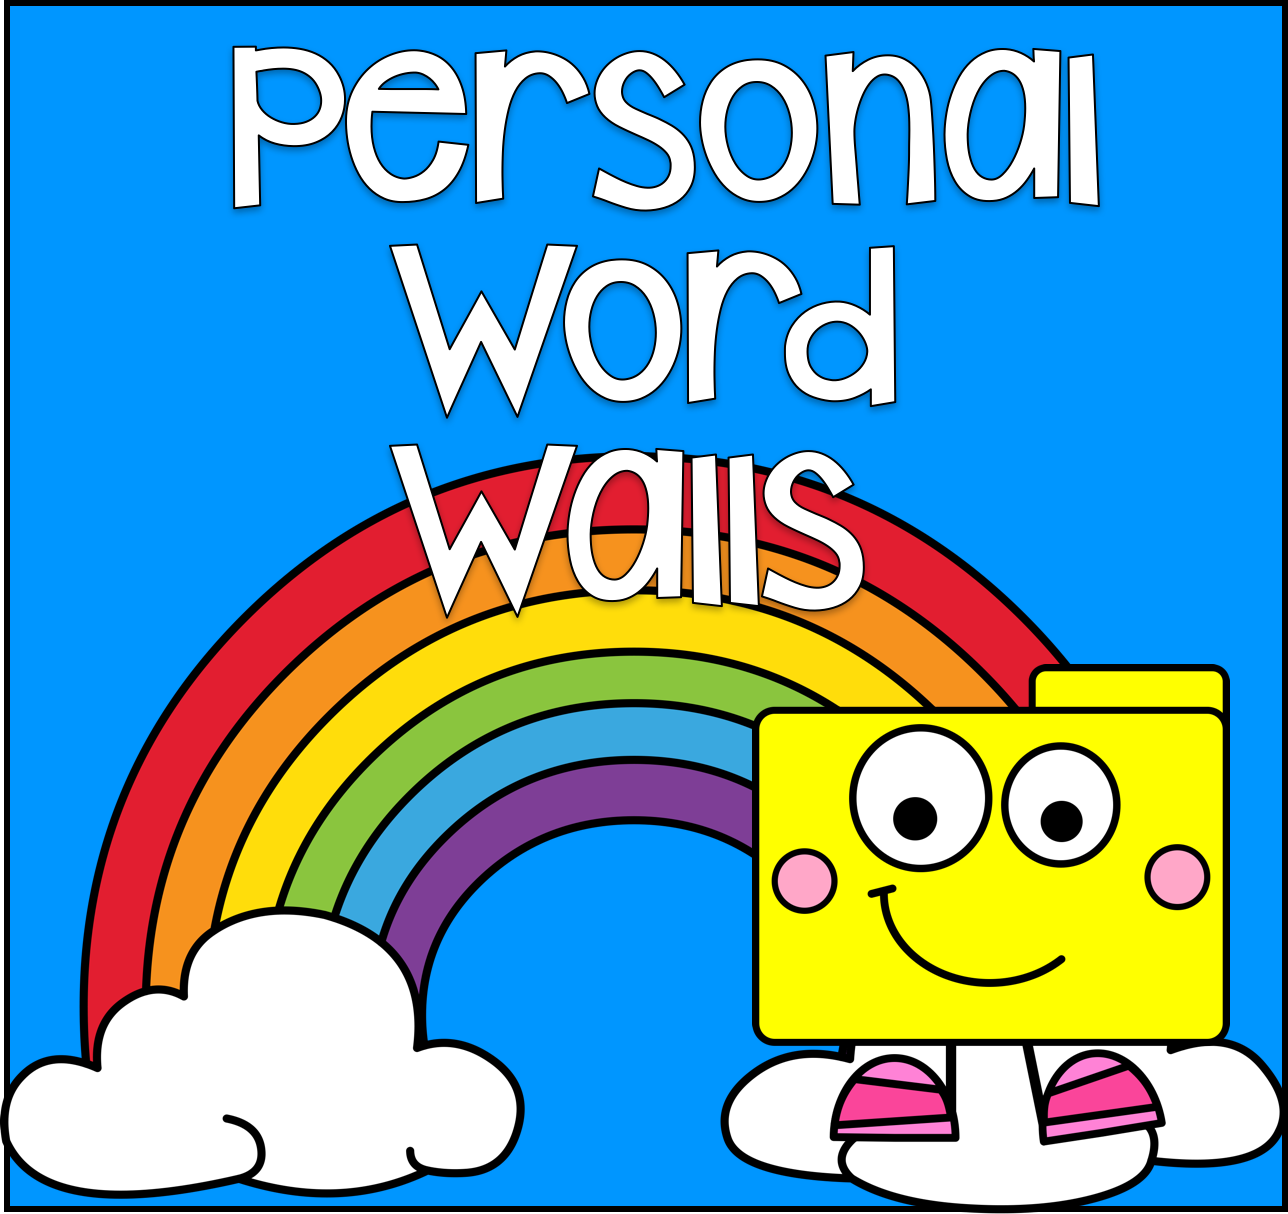 Personal Word Walls